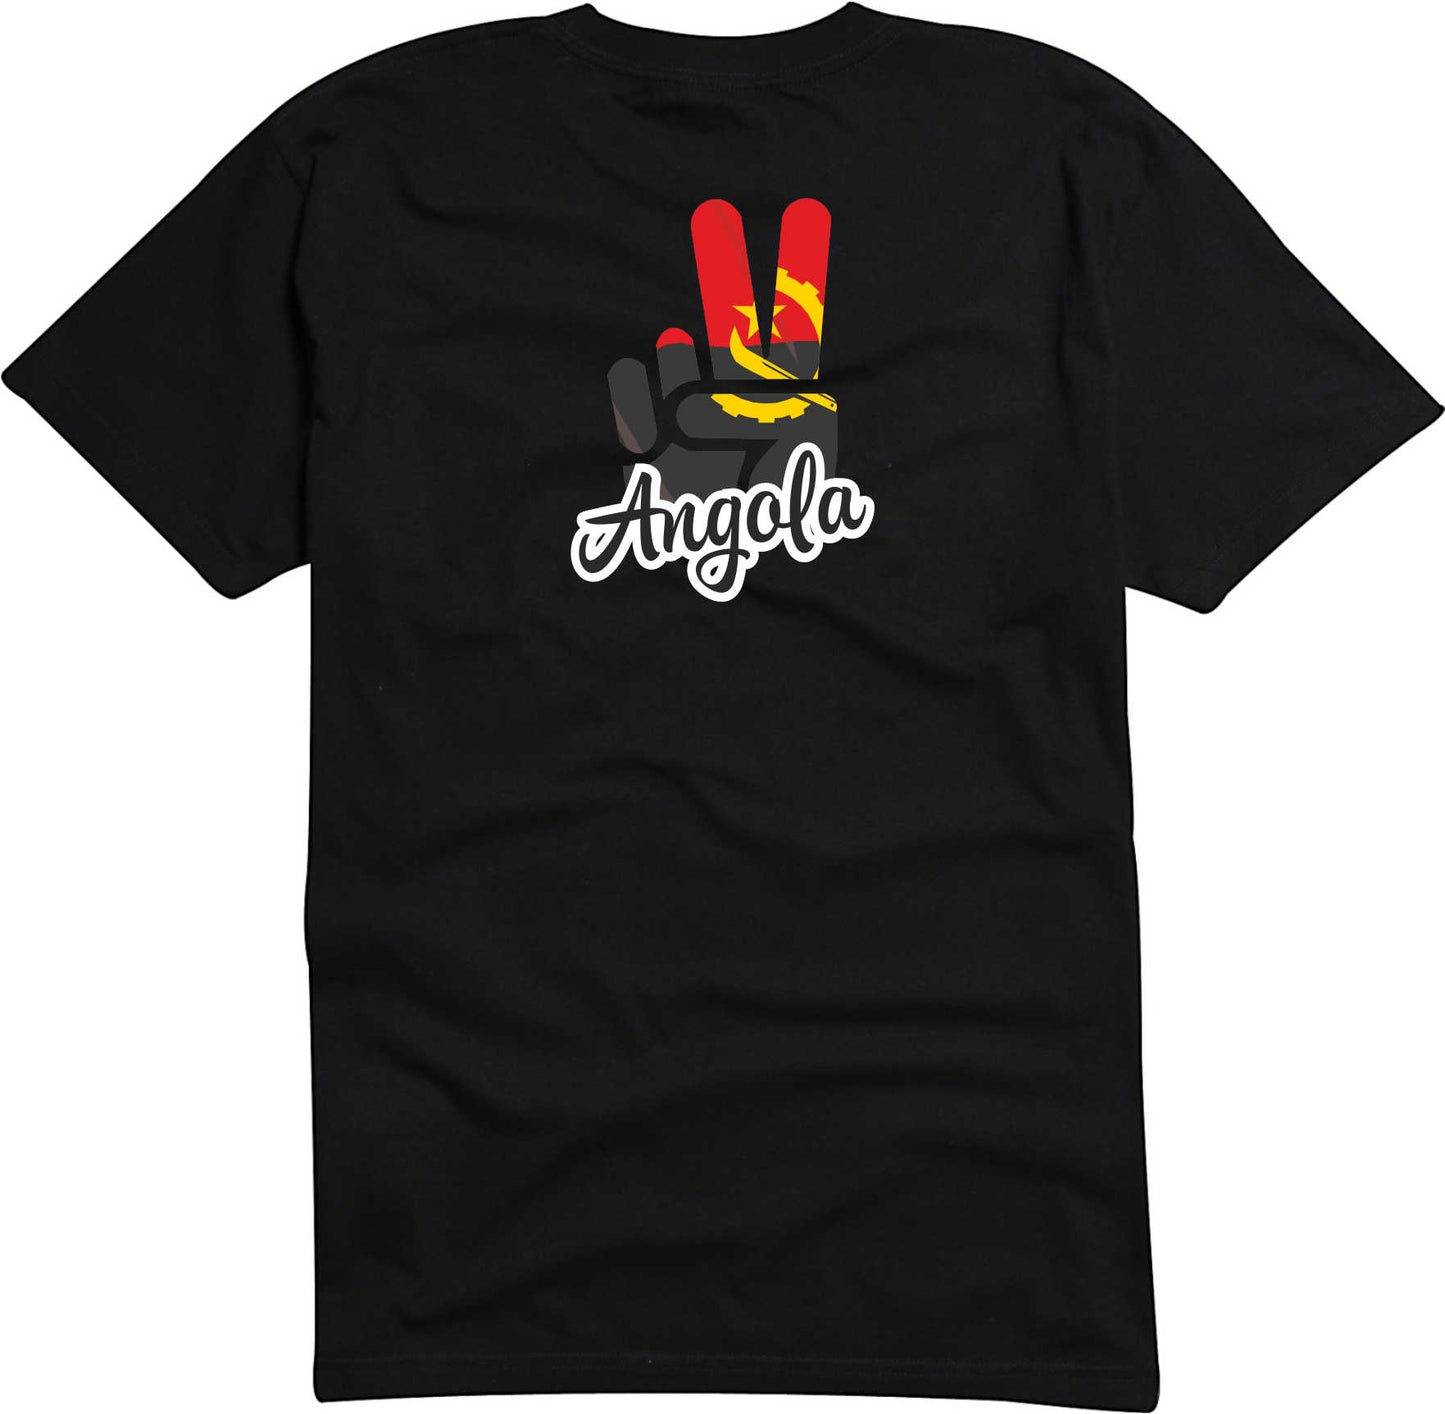 T-Shirt Herren - Victory - Flagge / Fahne - Angola - Sieg